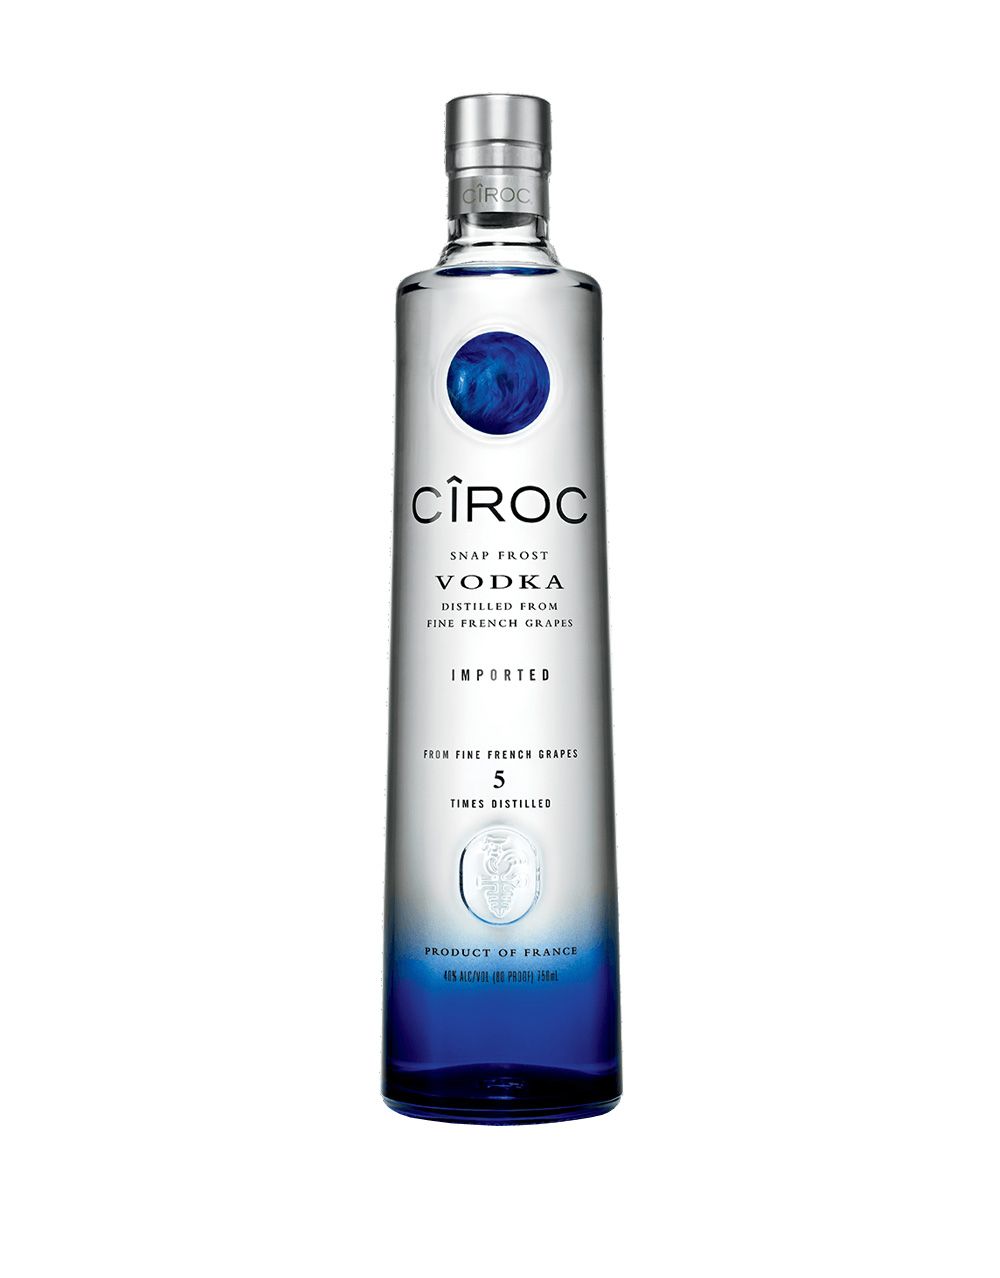 Ciroc Vodka Price